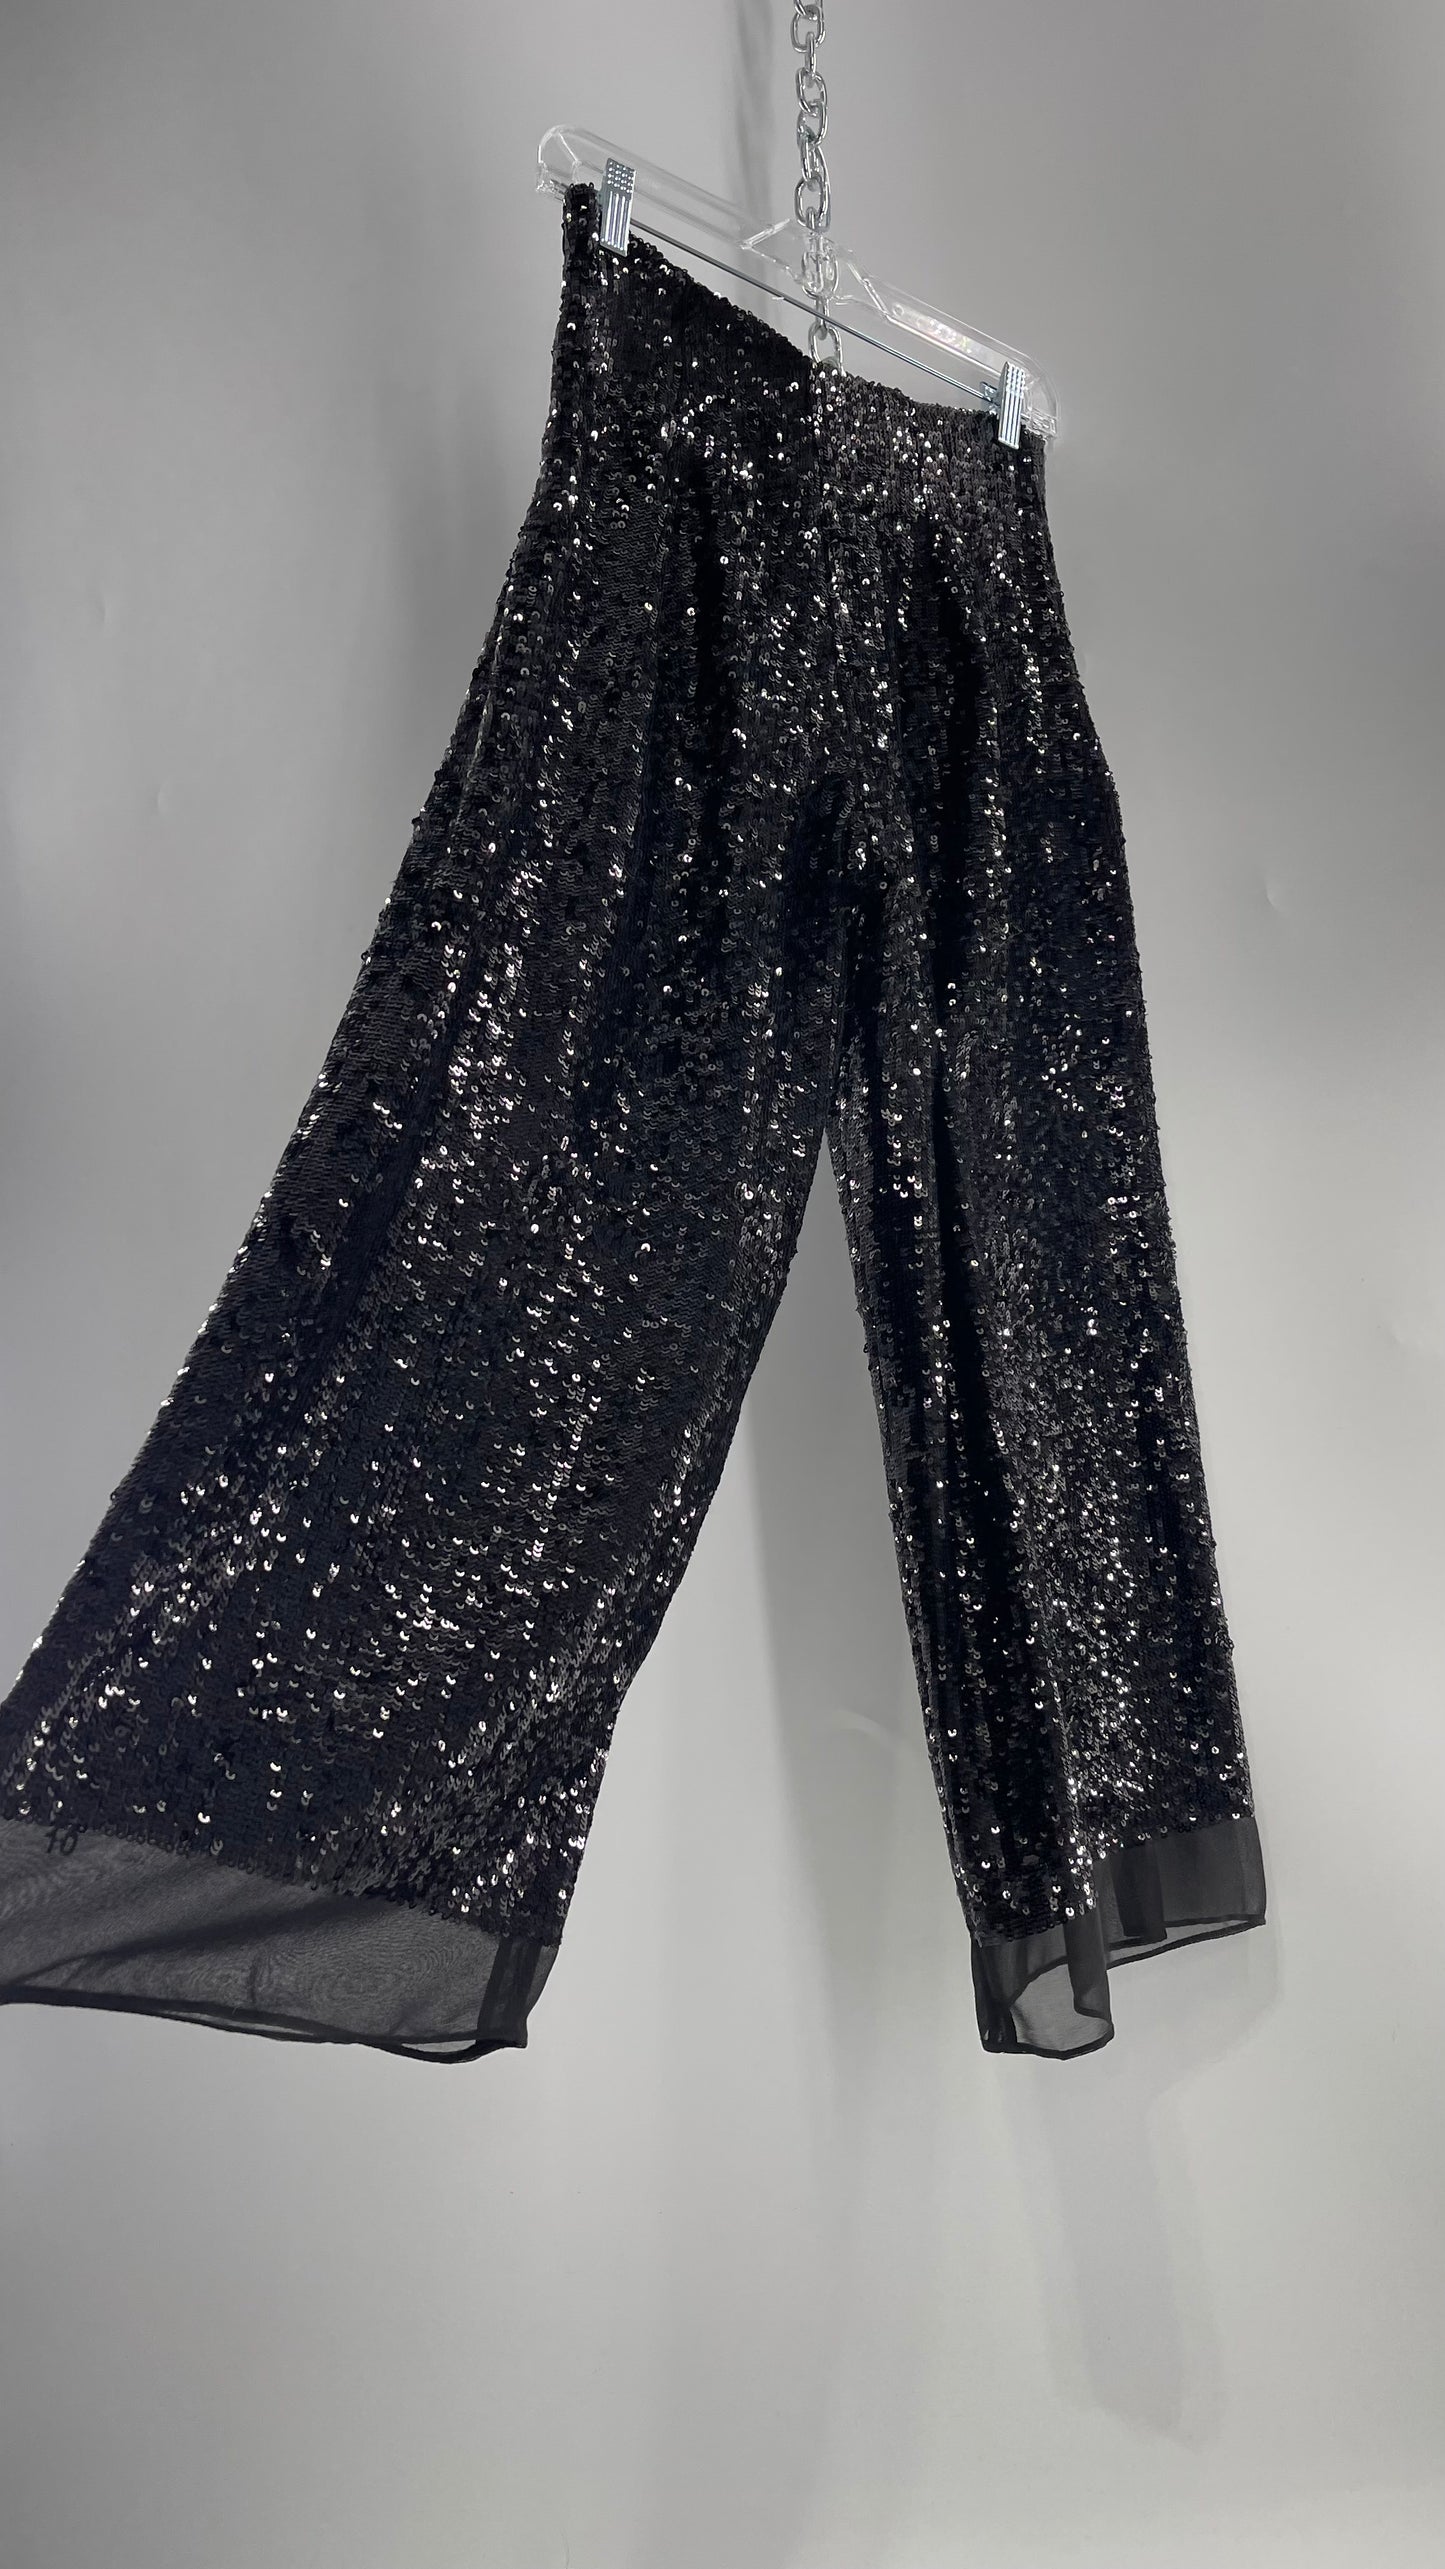 ZARA STUDIO Black Sequin Pijama Trouser with Chiffon Hem and Ribbon Lined Waist (Medium)